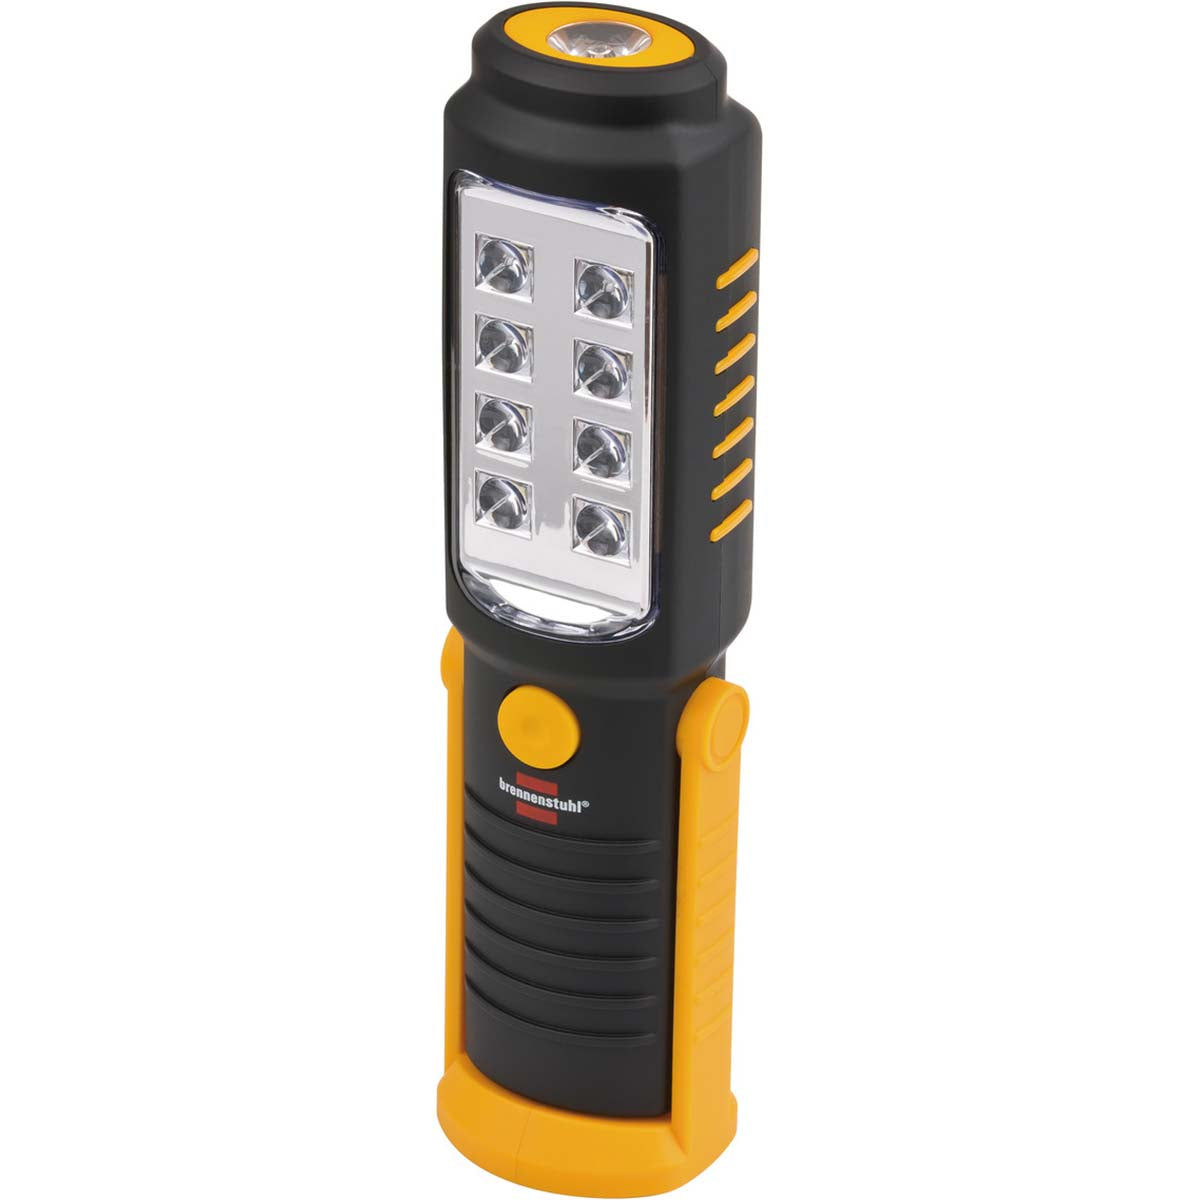 Tragbare Inspektions-LED-Leuchte mit 8 + 1 hellen SMD-LEDs (batteriebetrieben, max. 10 Stunden Leuchtdauer, drehbarer Haken, Magnet)